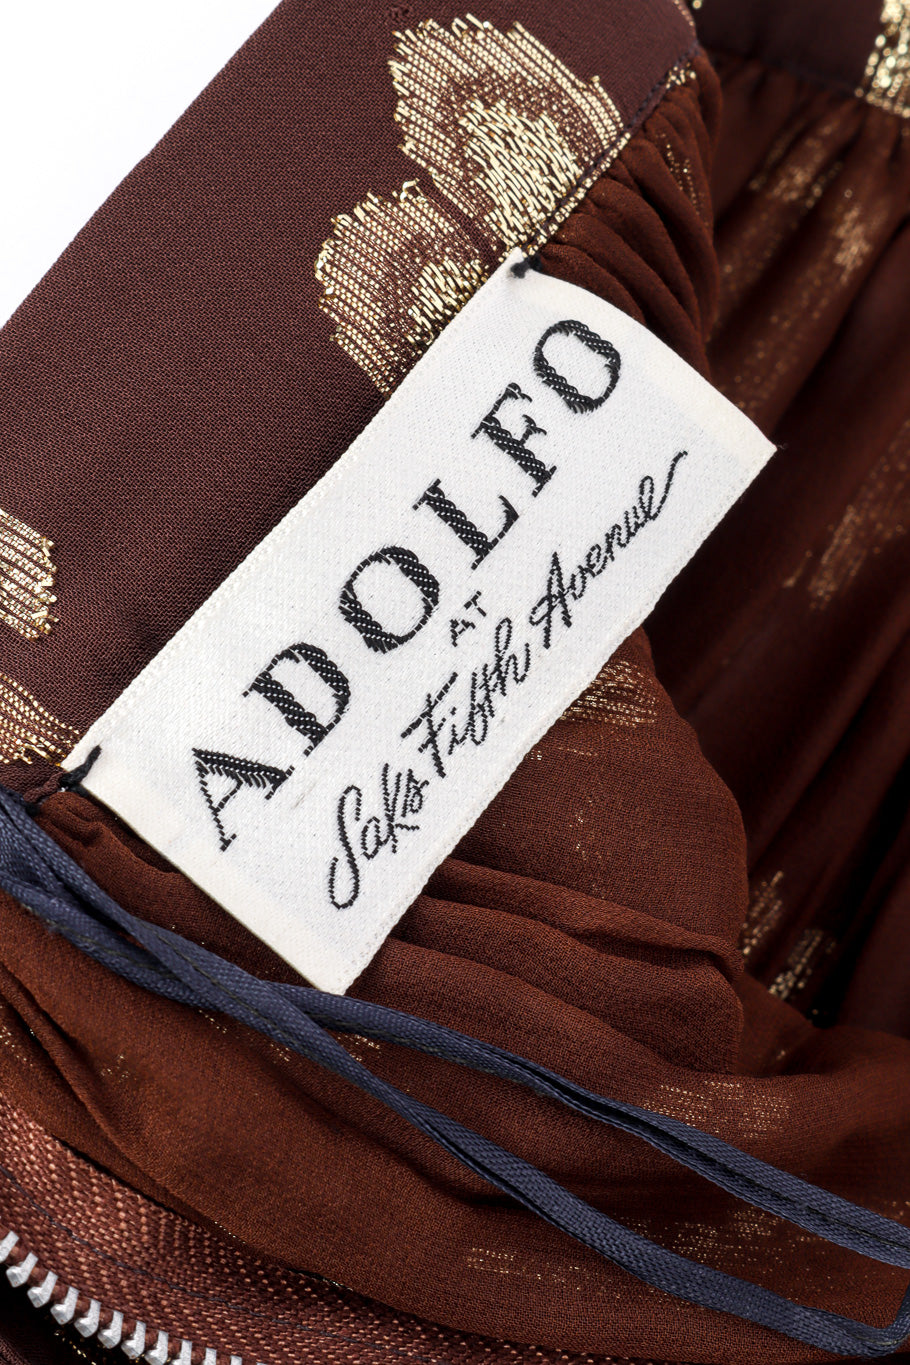 Vintage Adolfo Metallic Top and Skirt Set skirt signature label closeup @recessla